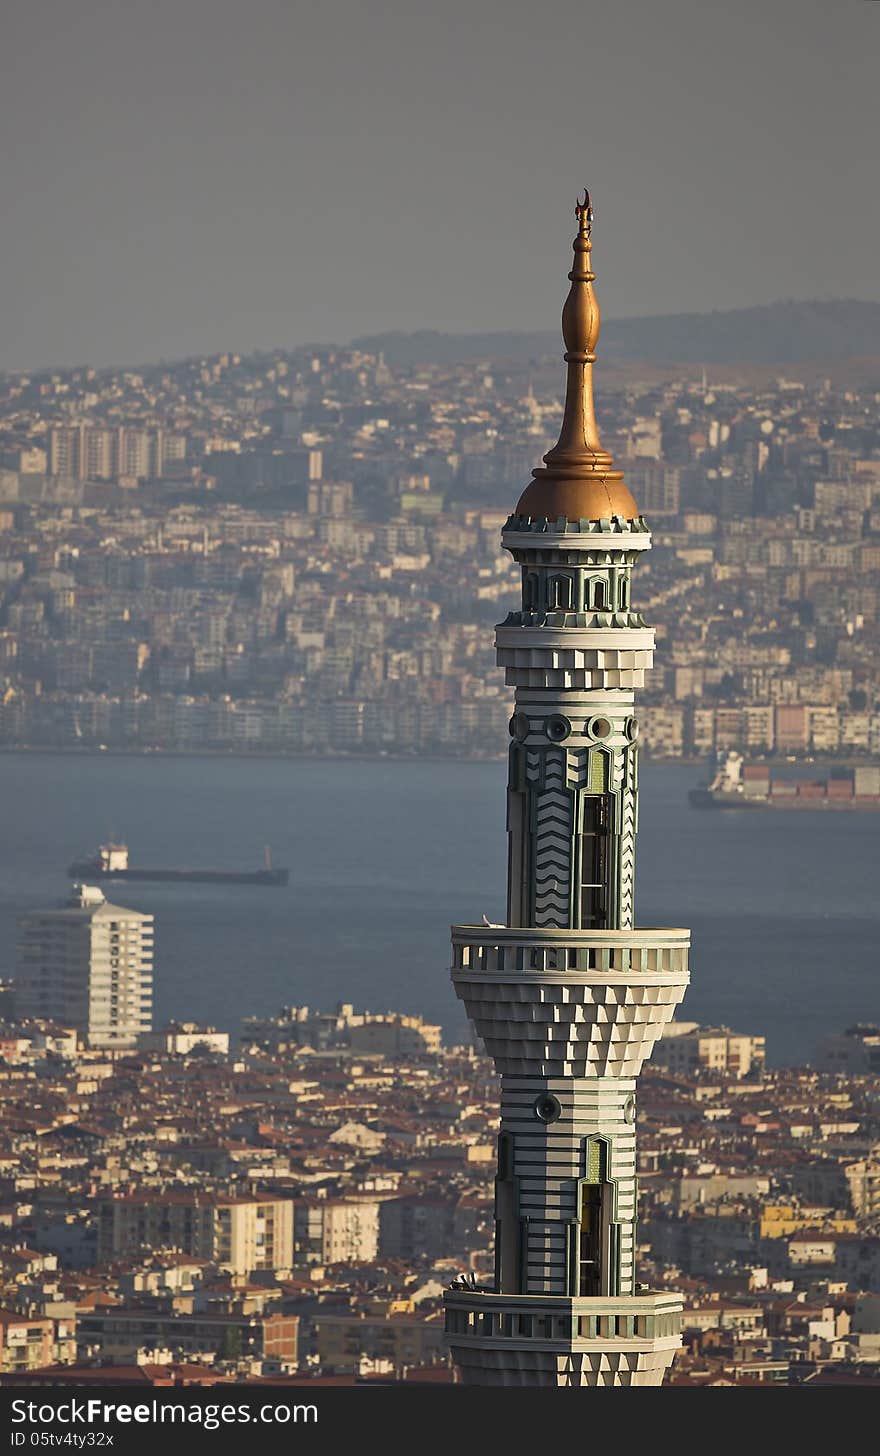 Minaret of a Mosque located in Izmir, Turkey. Minaret of a Mosque located in Izmir, Turkey